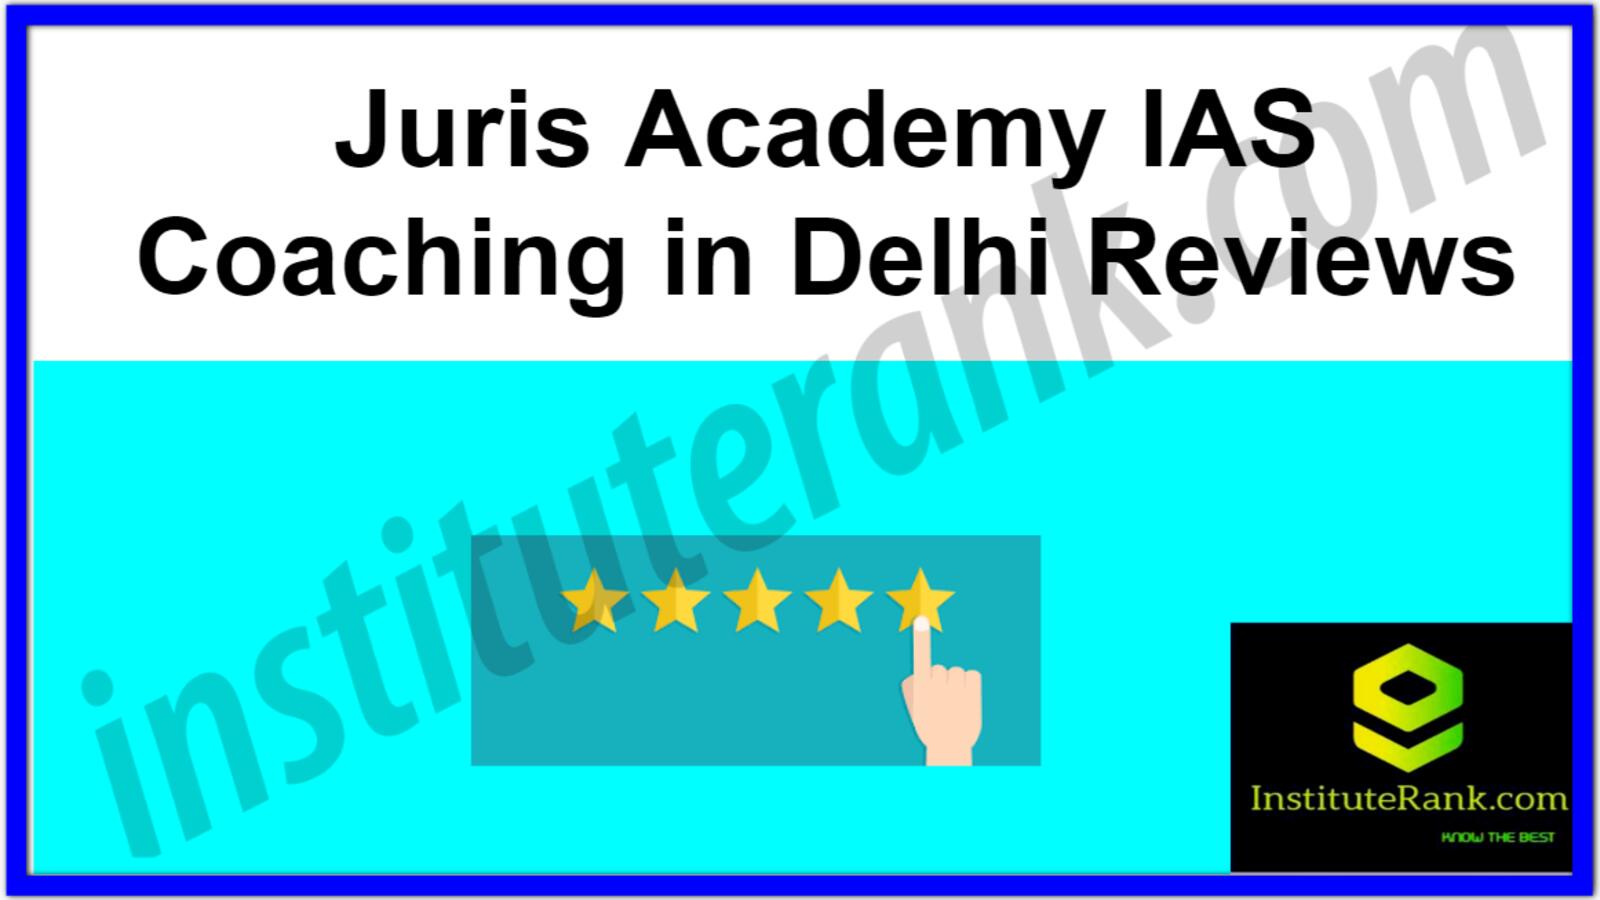 Juris Academy IAS coaching in Delhi